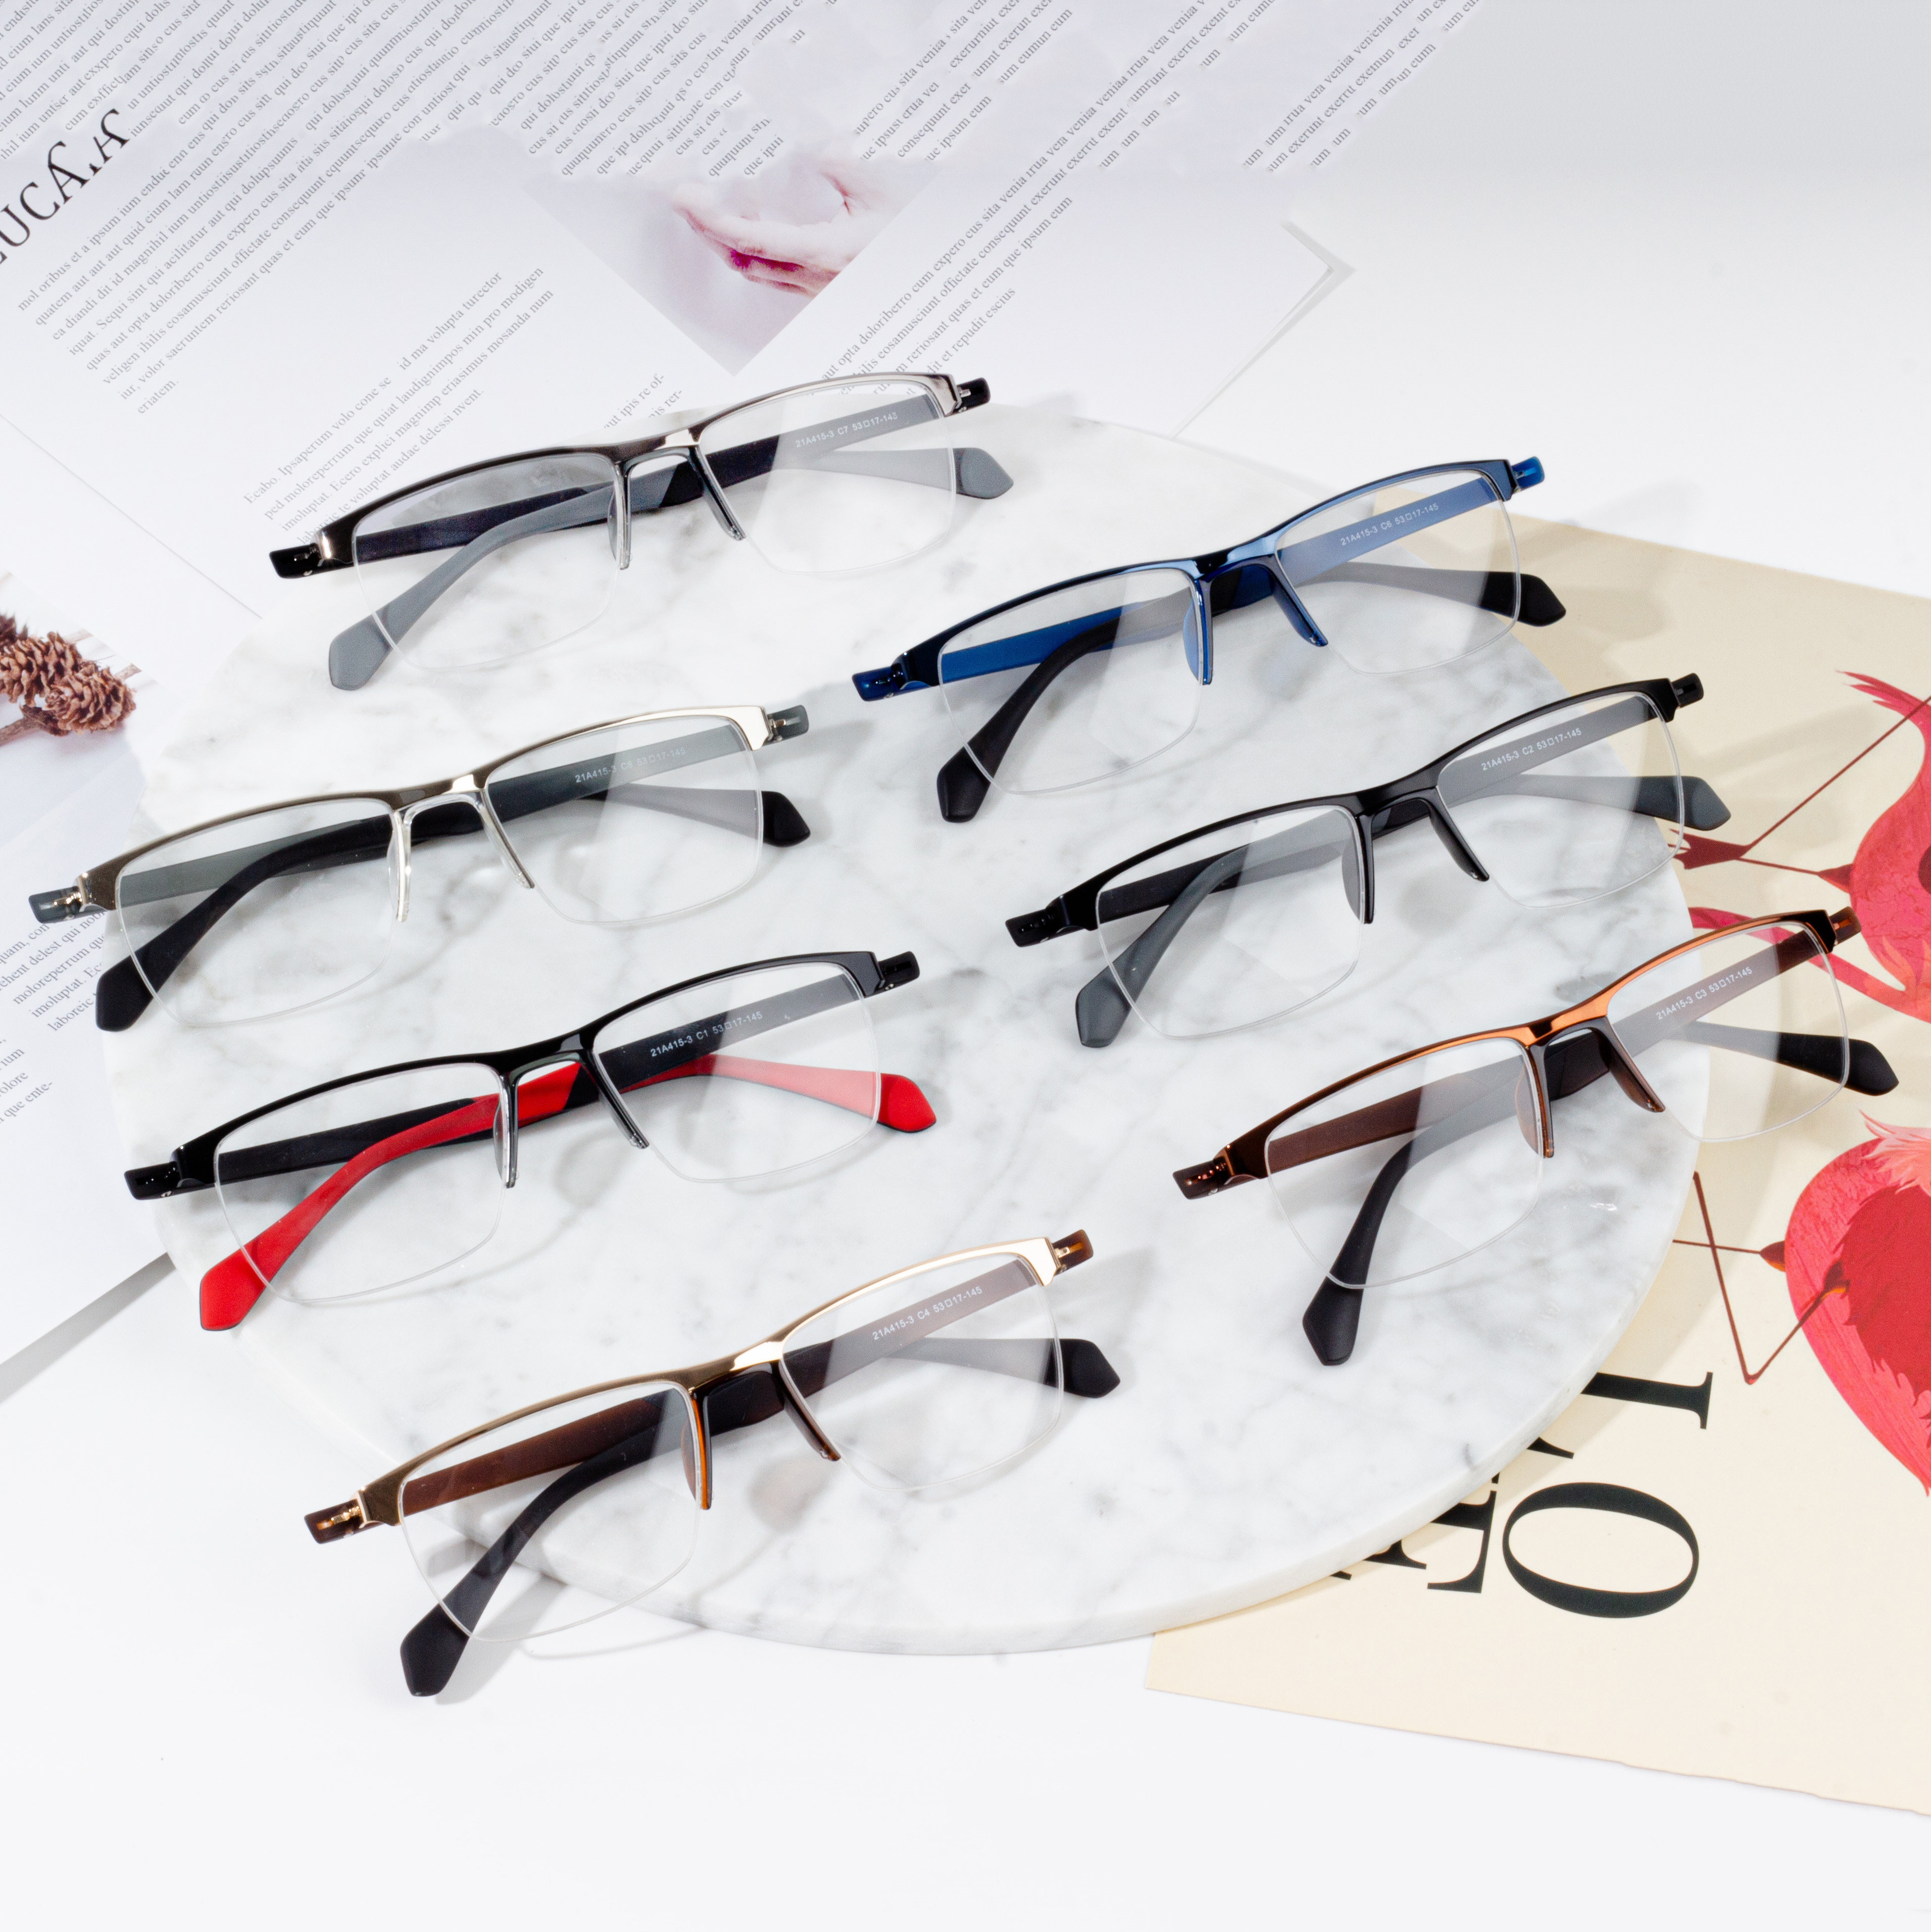 पुरुषों के लिए थोक प्रोमोशनल सस्ता चश्मा